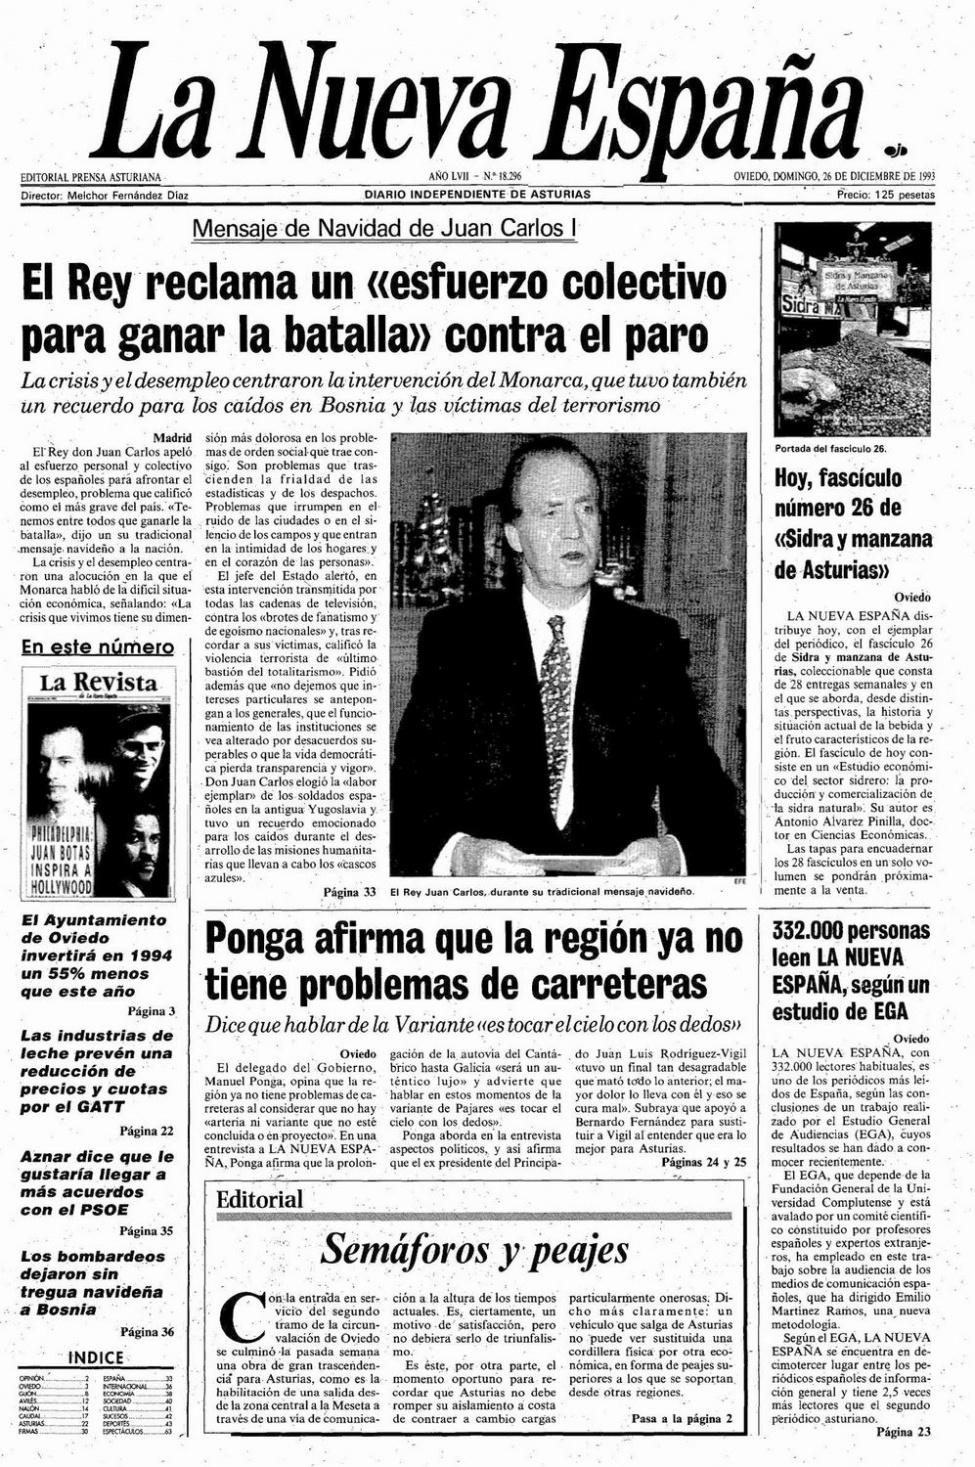 Portada del Domingo, 26 de Diciembre de 1993